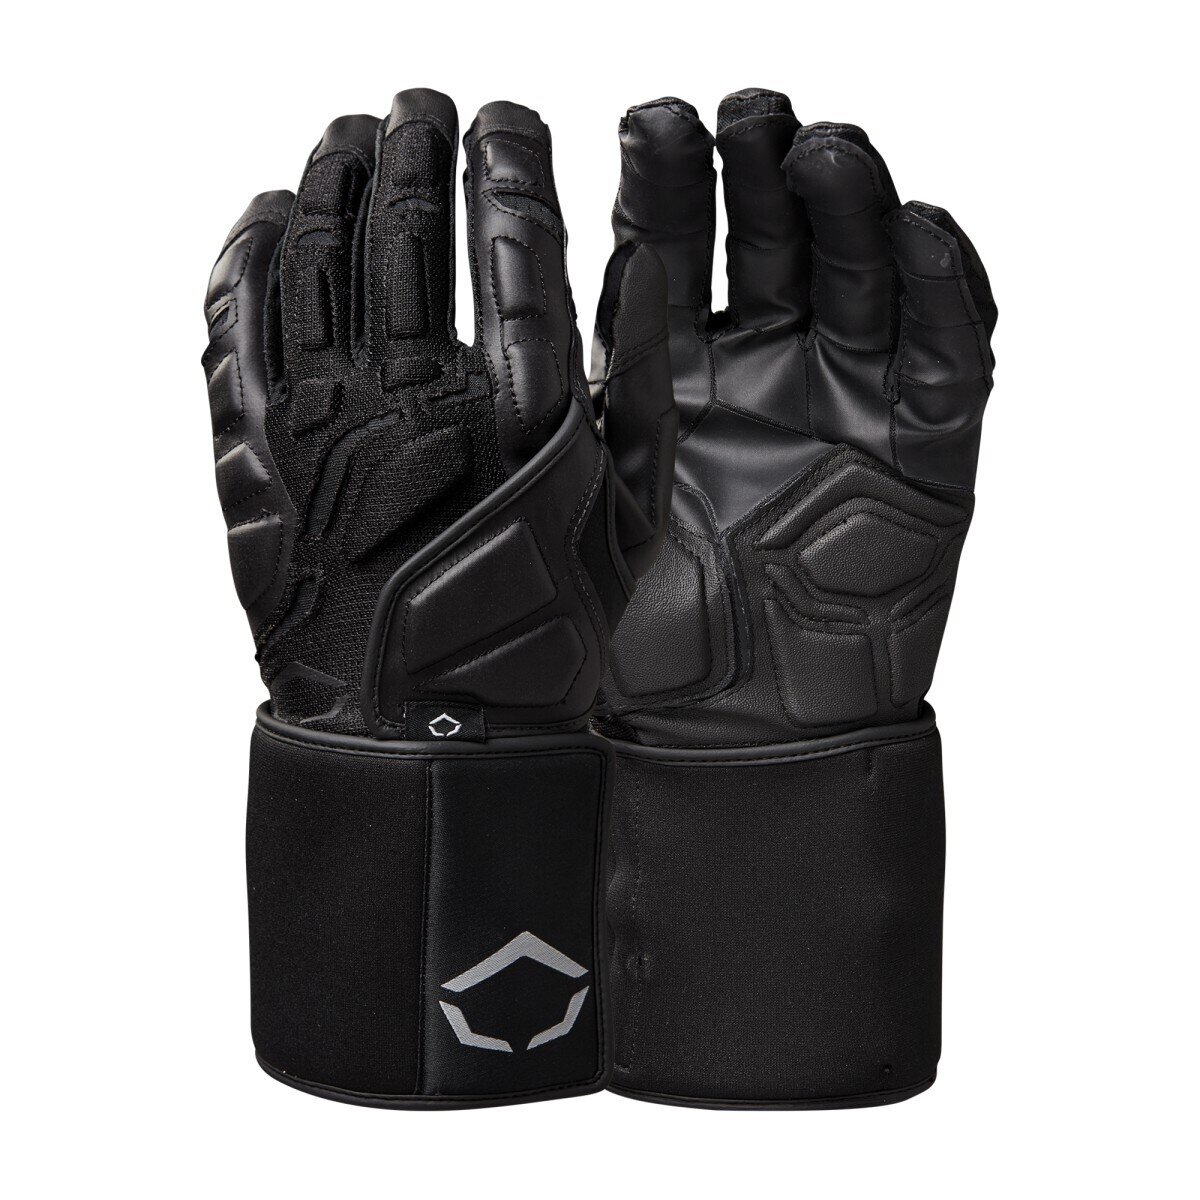 Evoshield Trench lineman gloves